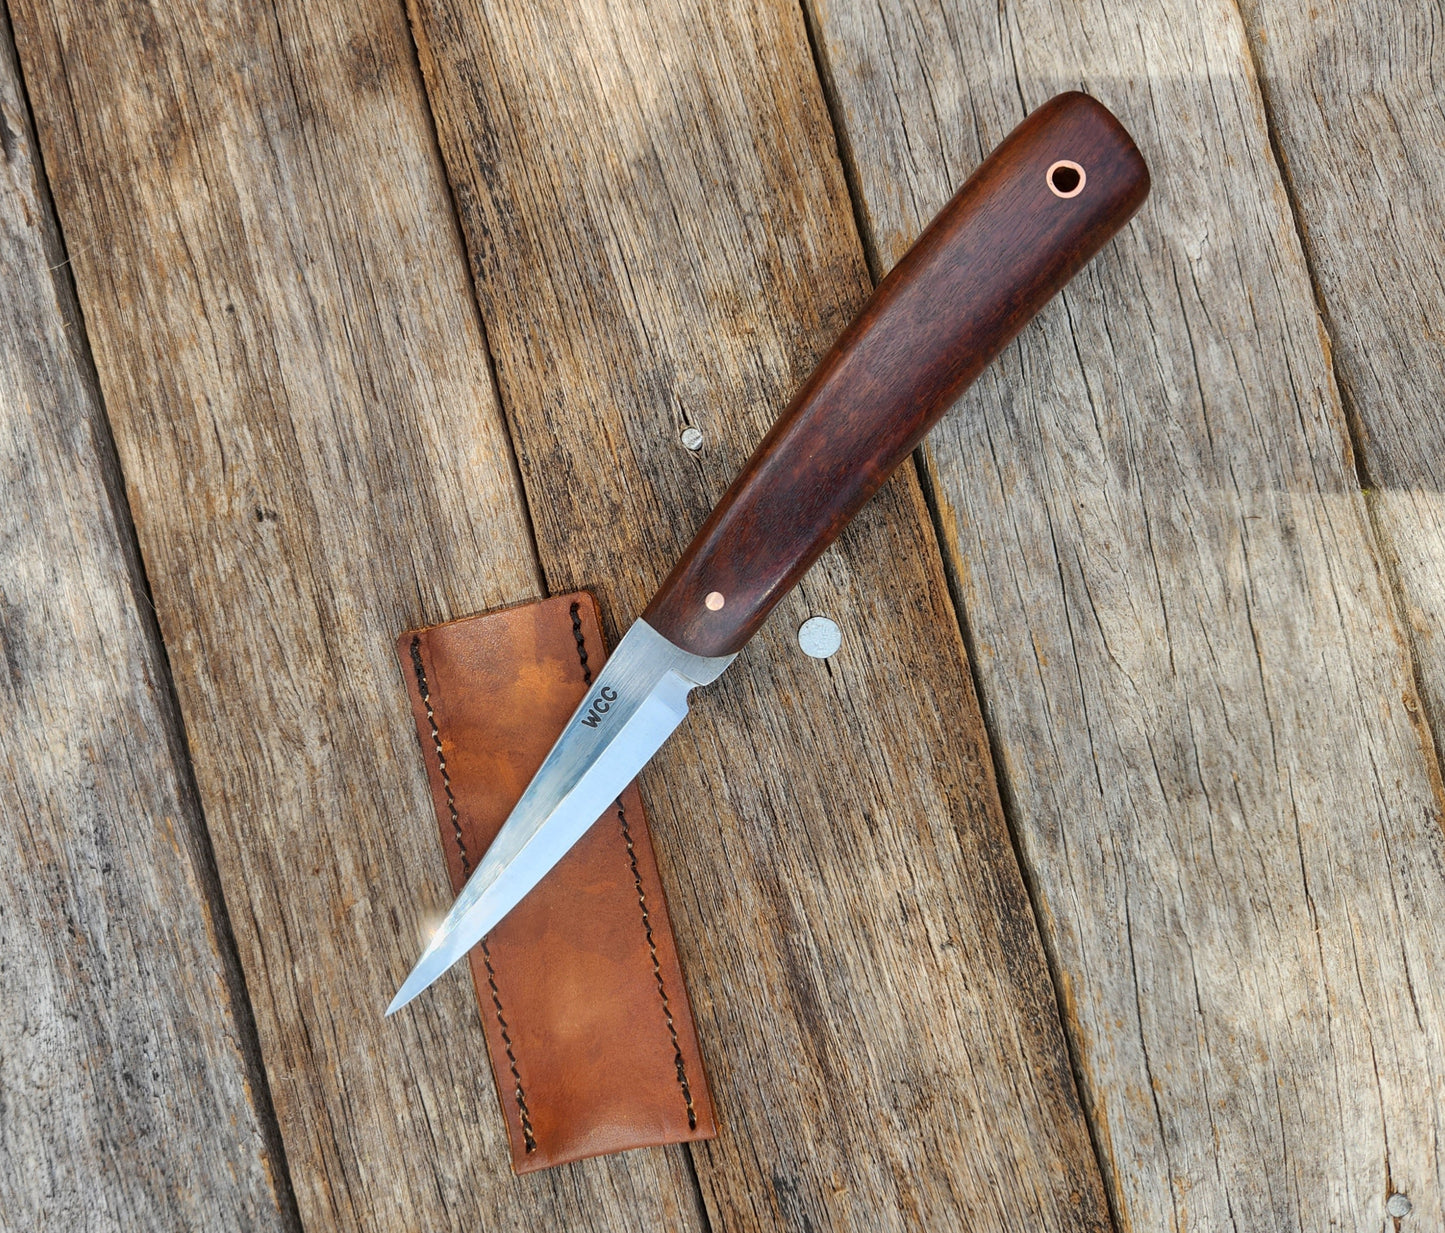 Woodland cc Custom 85mm Full Tang Sloyd Knife                                           MADE TO ORDER